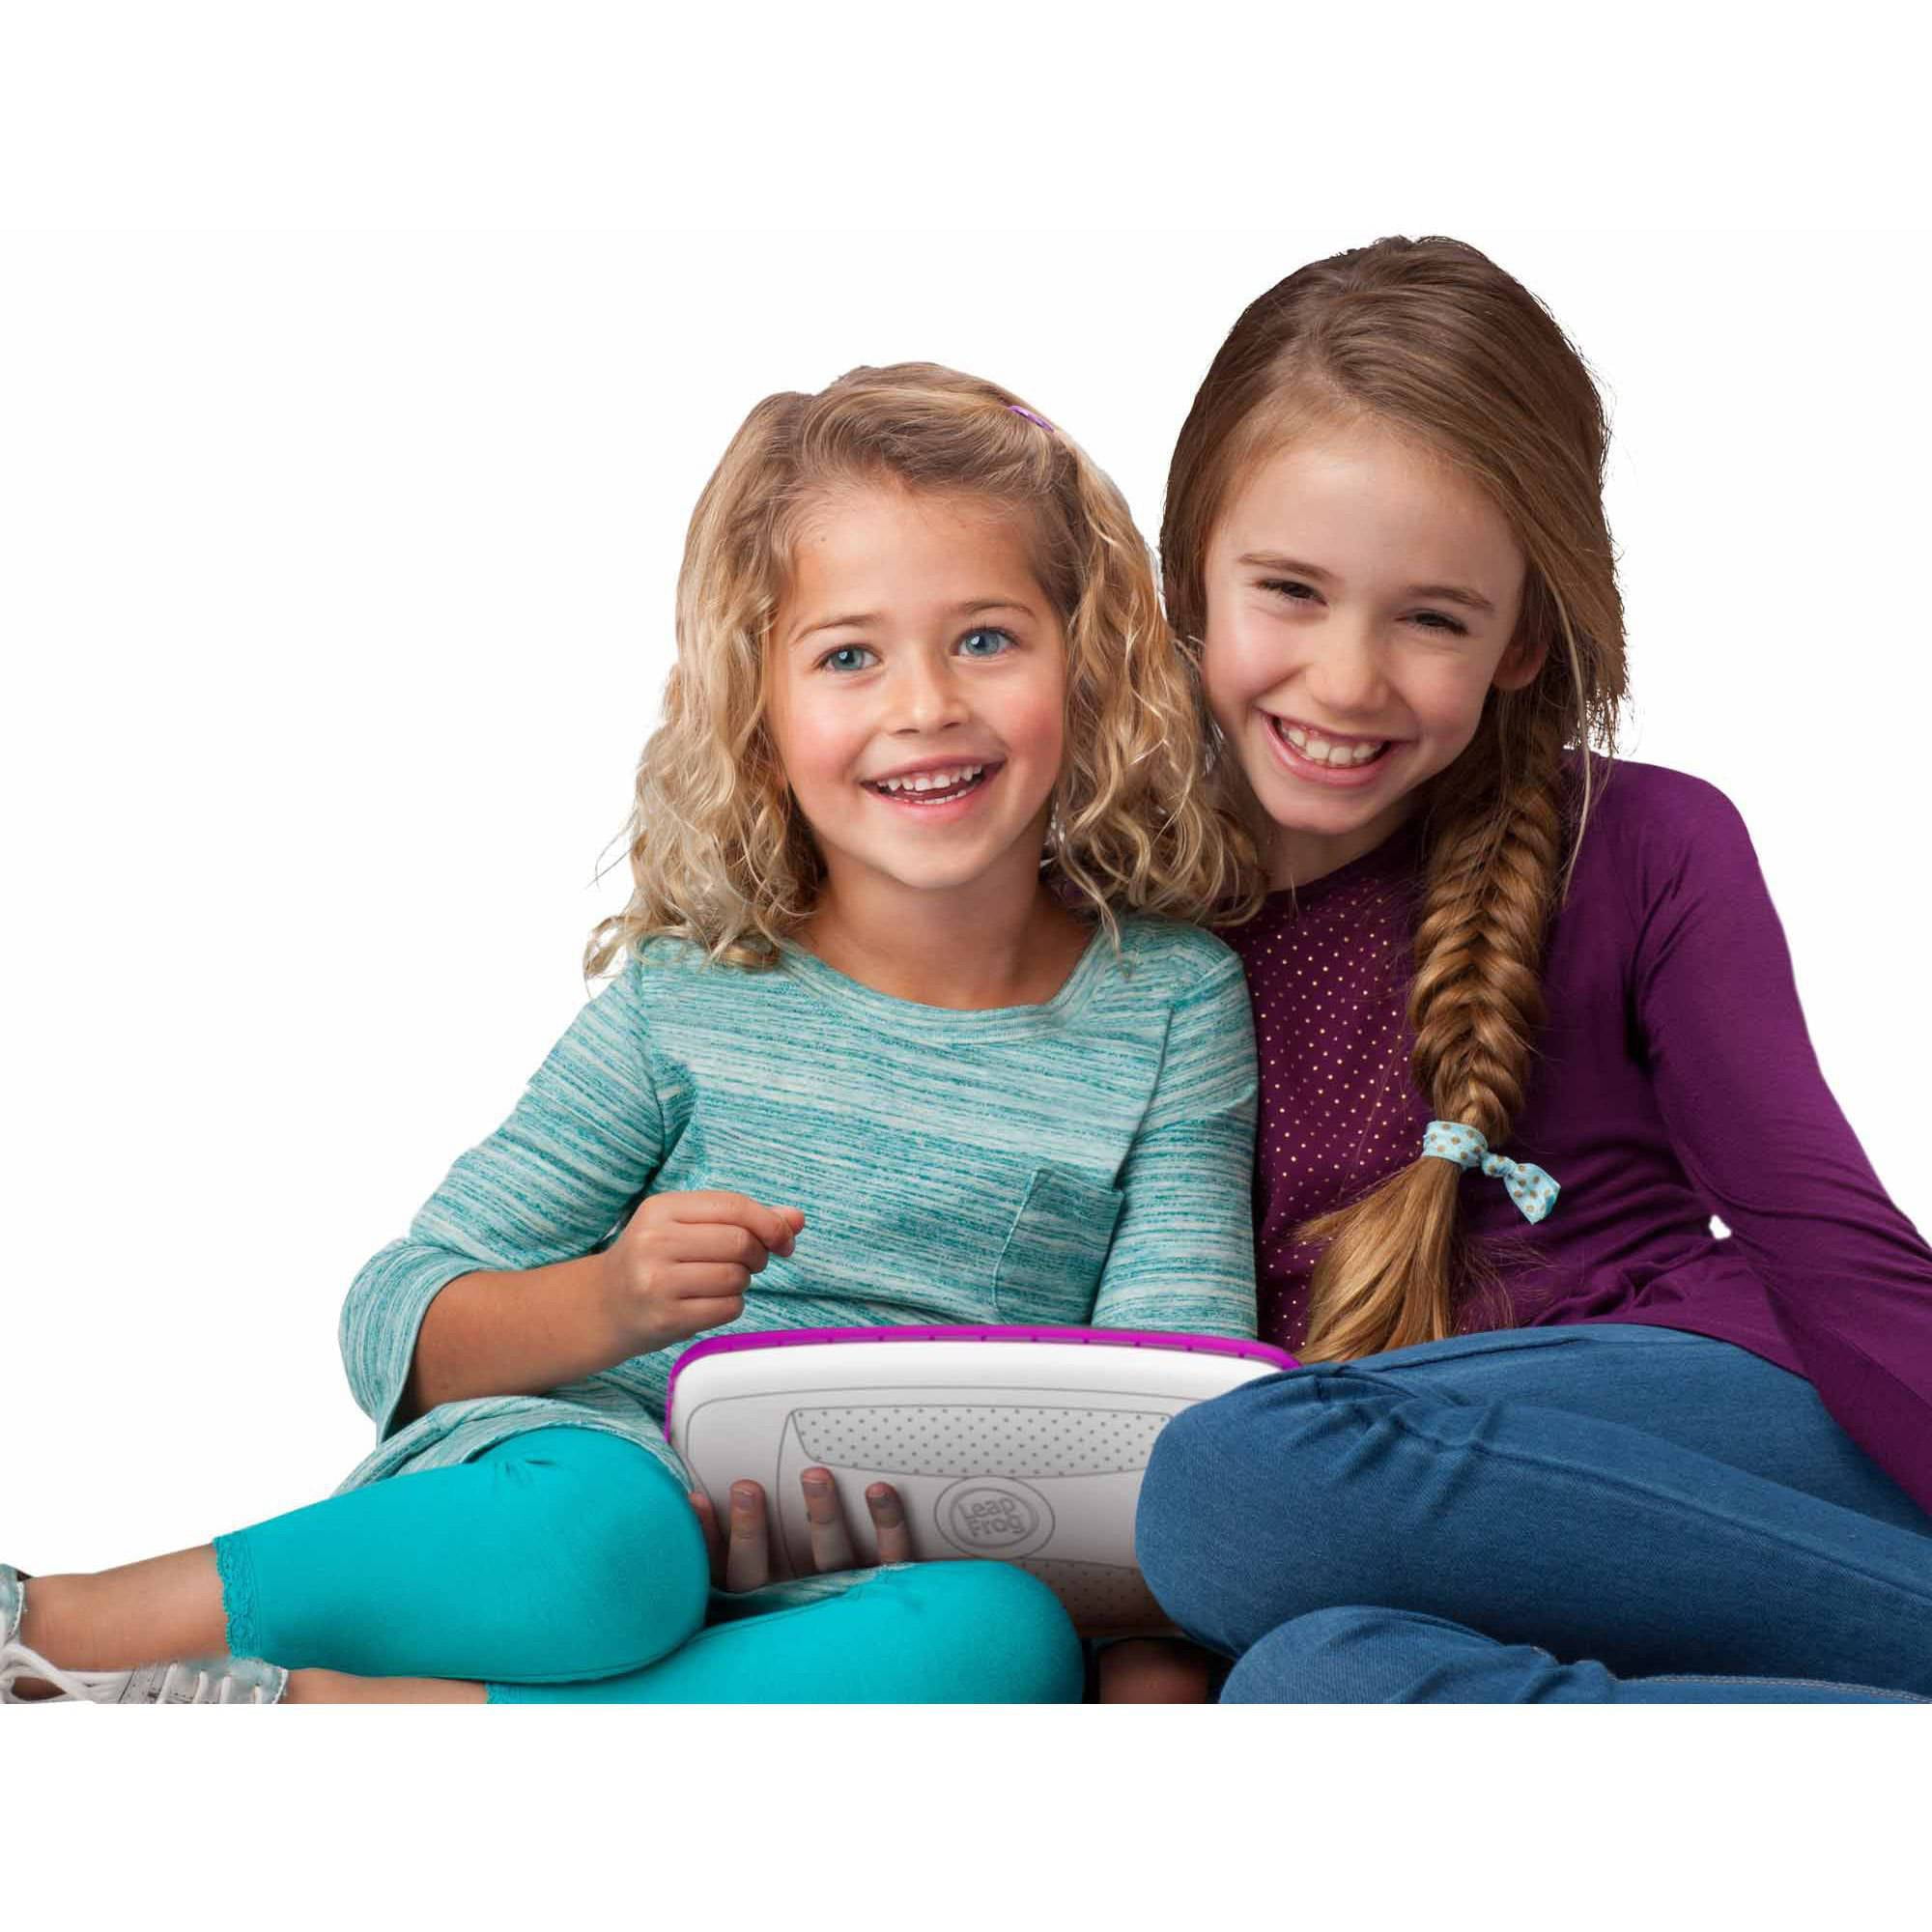 LeapFrog LeapPad Platinum Kids Learning Tablet Purple 31566 for sale online 